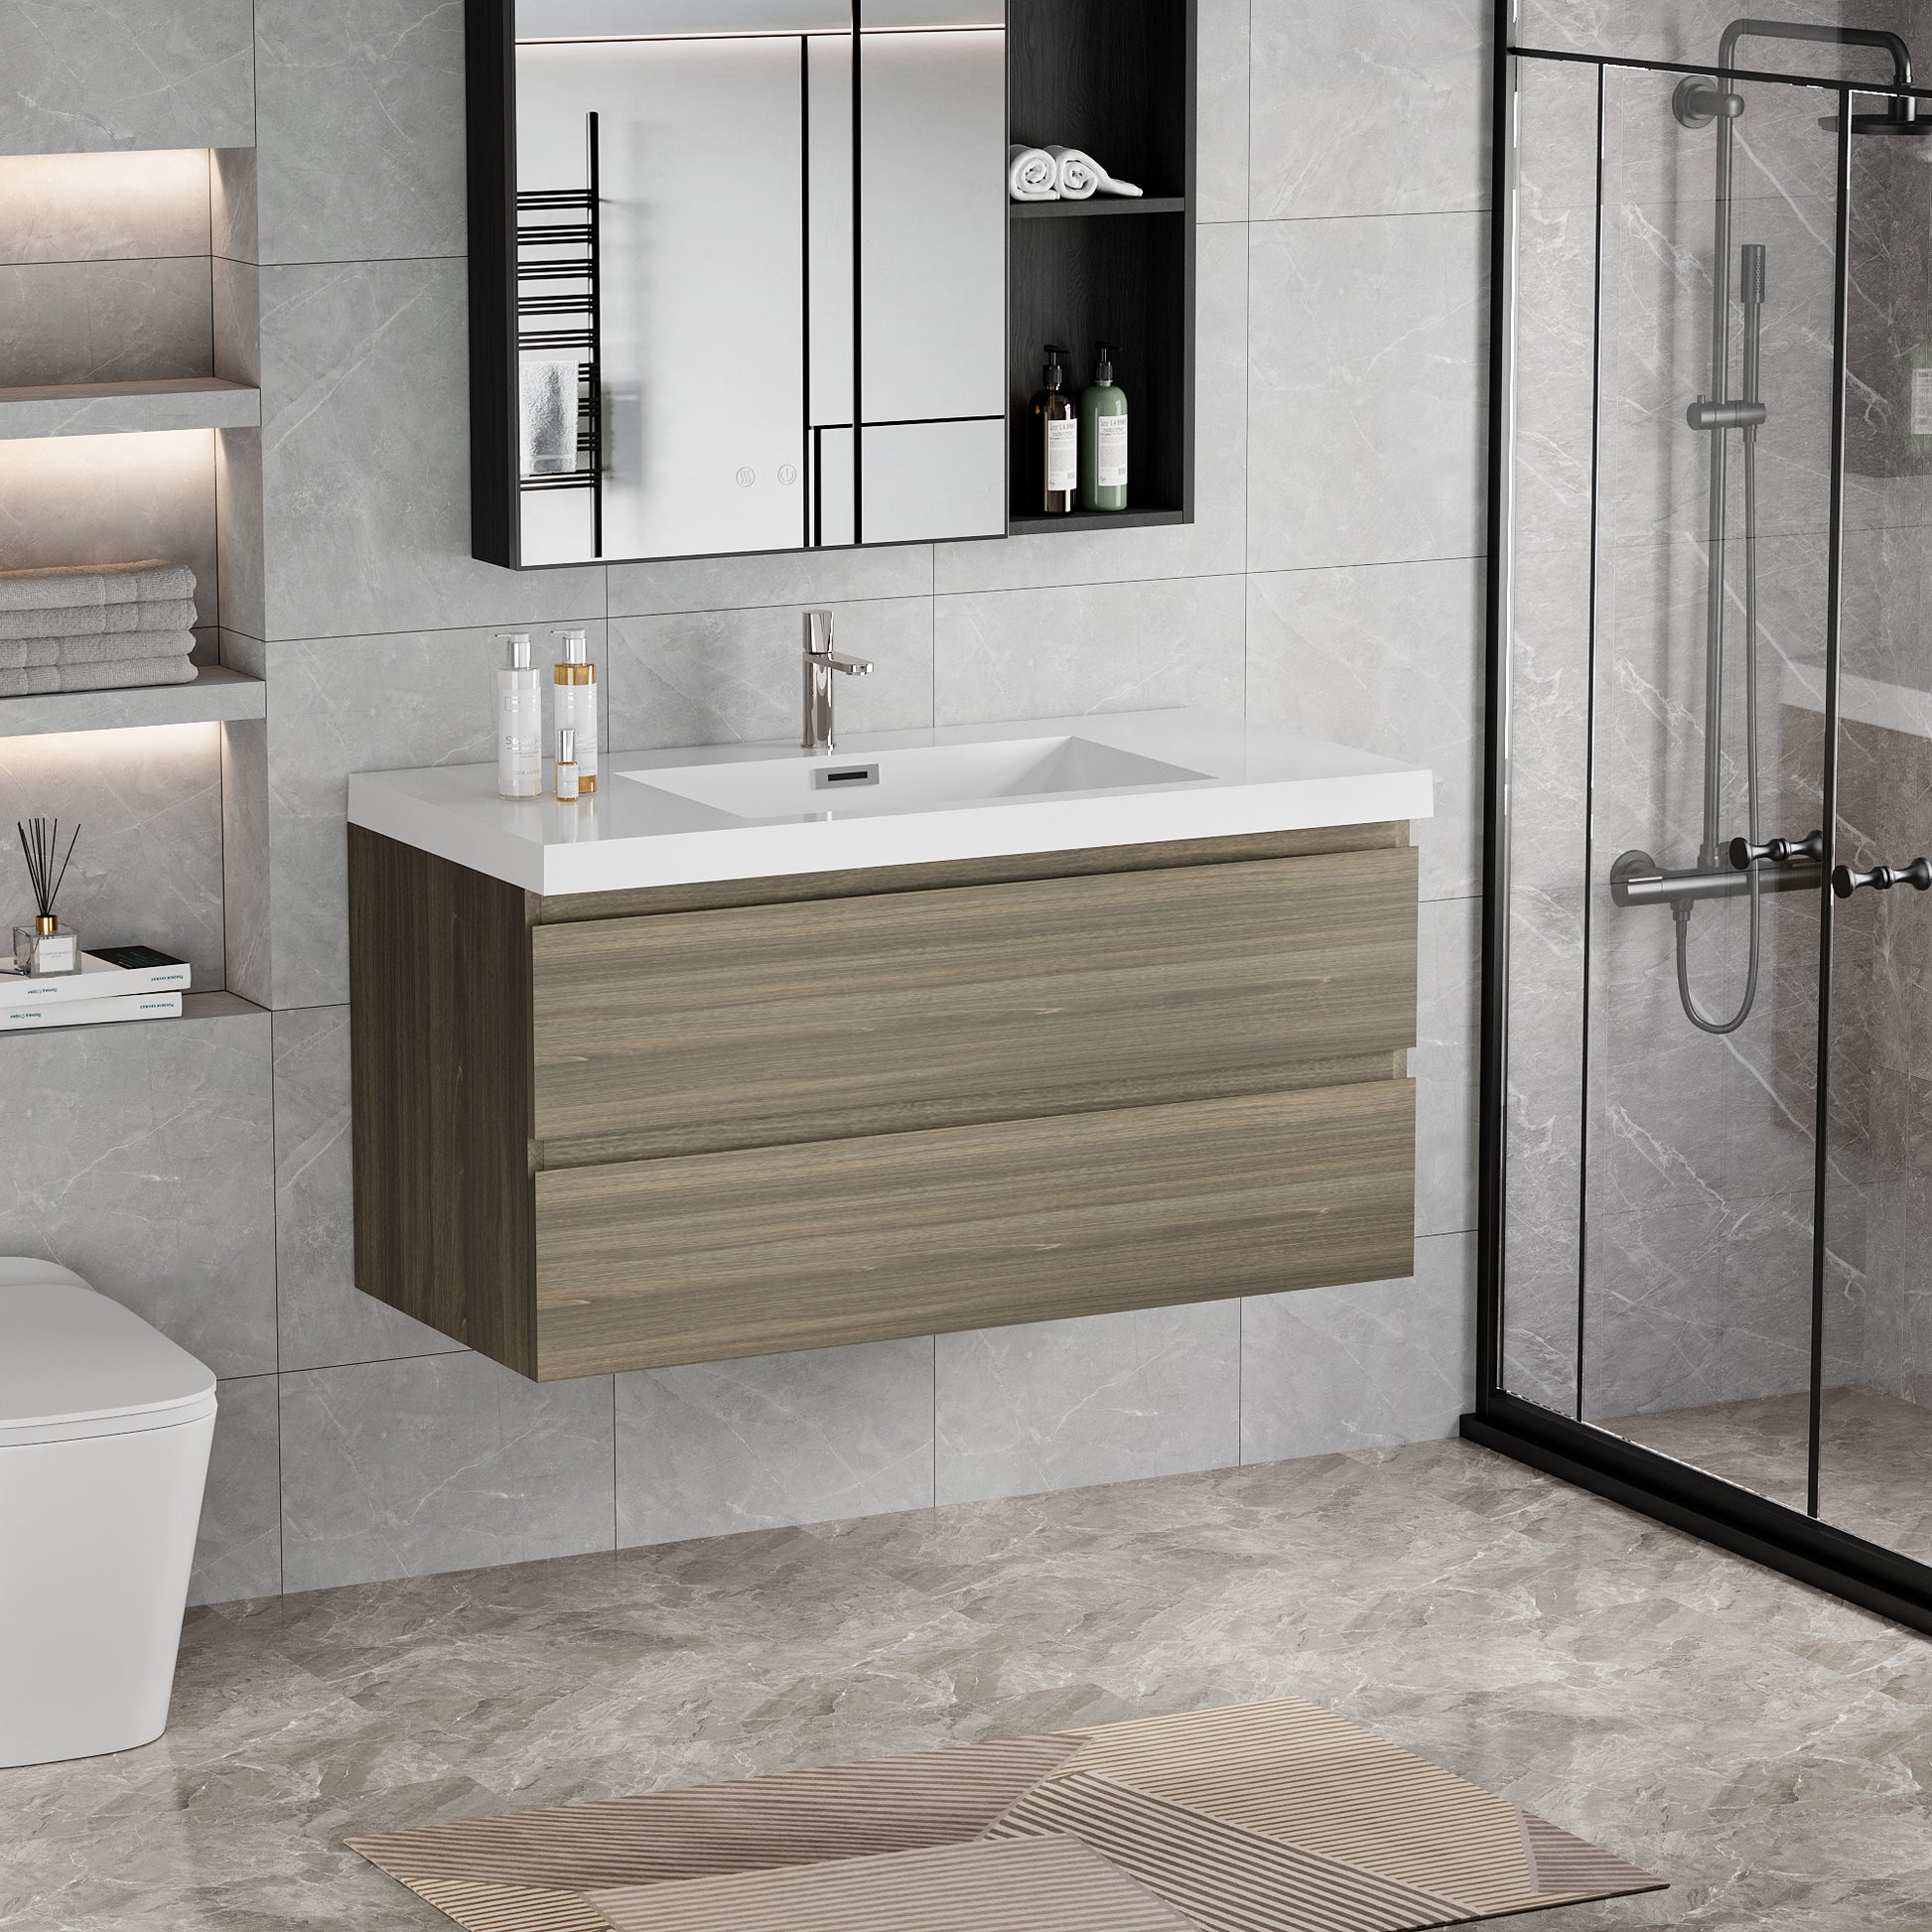 42" Floating Bathroom Vanity with Sink, Modern Wall 2-grey-bathroom-wall mounted-melamine